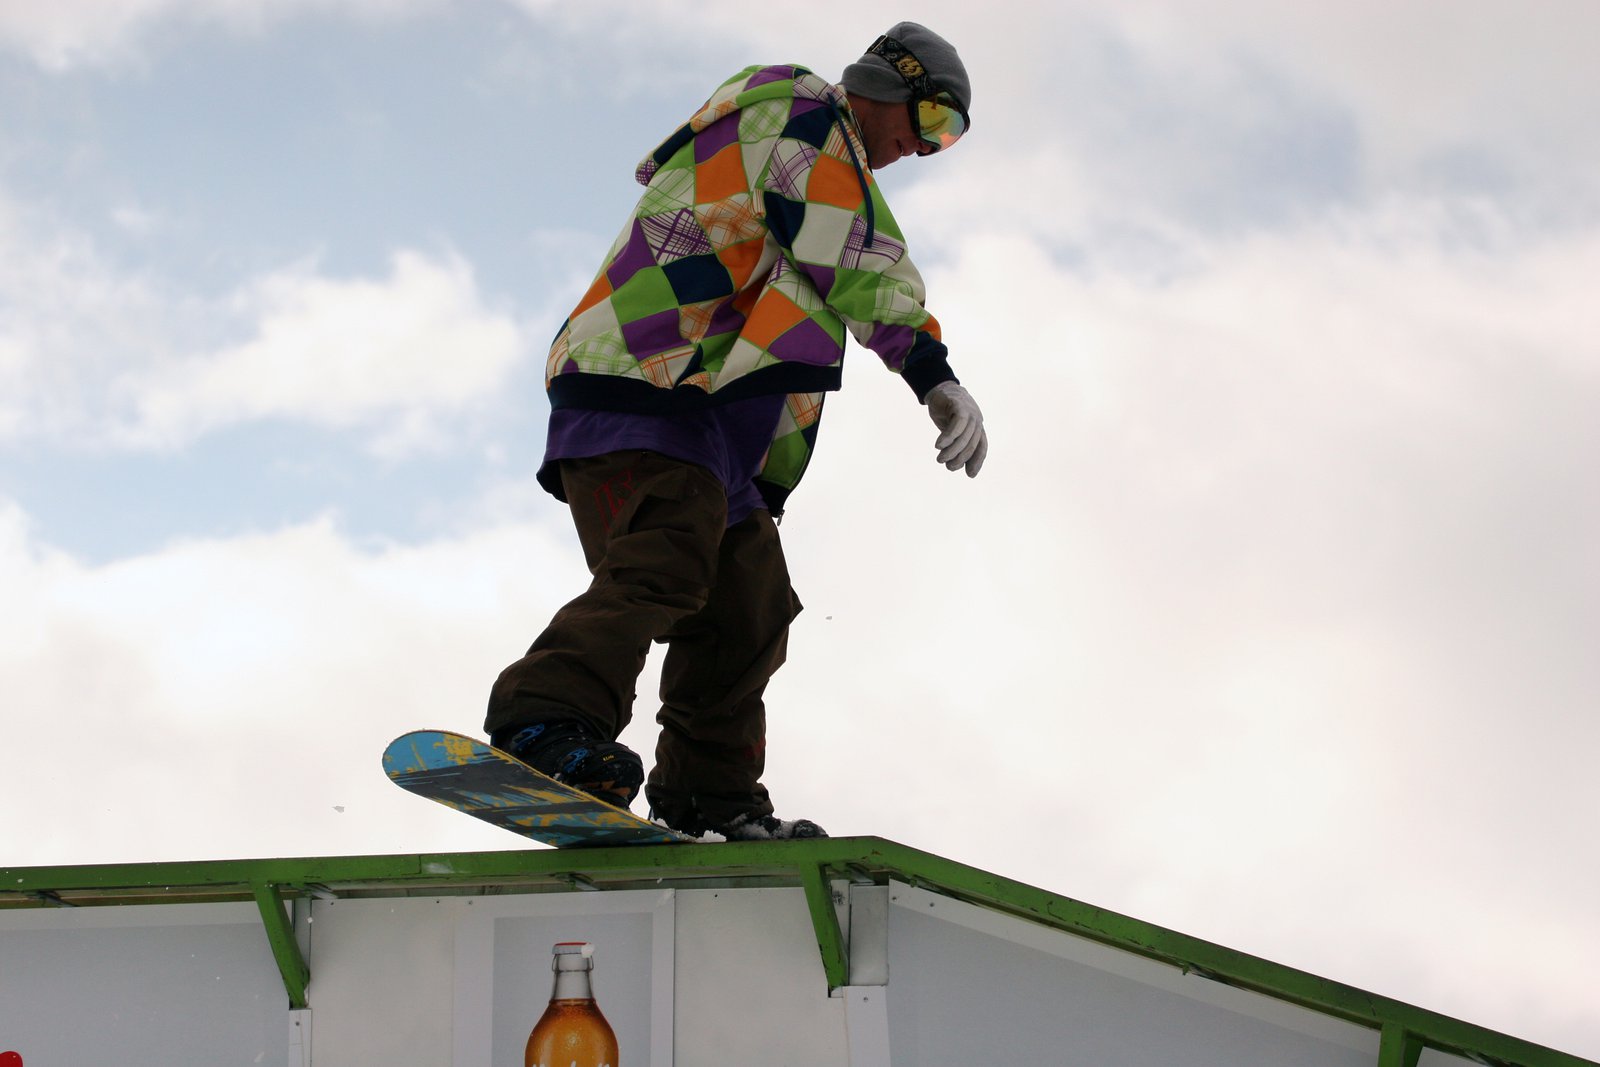 Snowboard bs kink #2